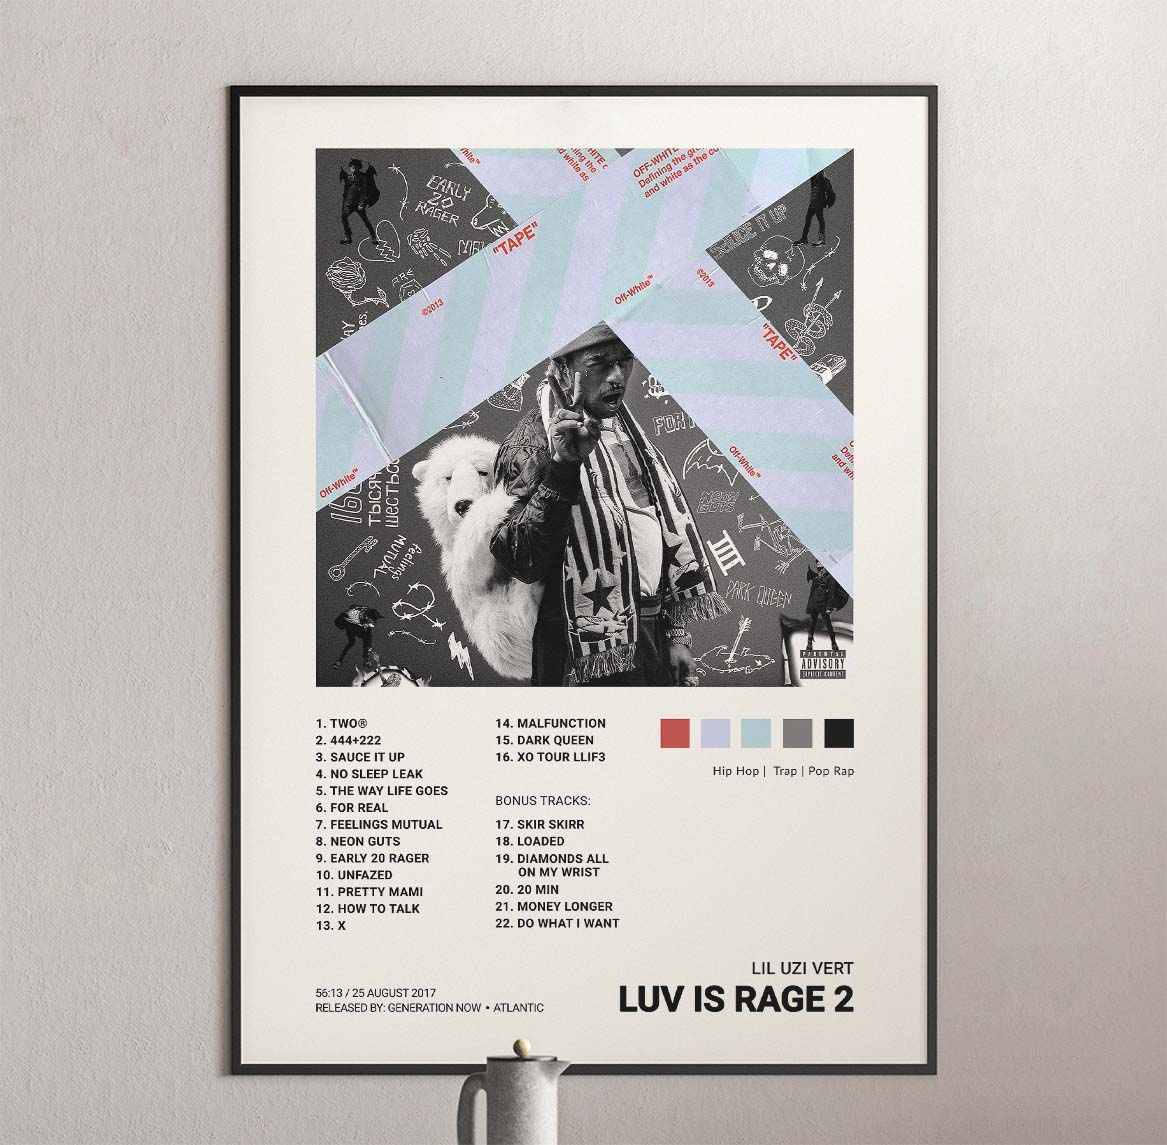 Lil Uzi Vert - Luv Is Rage 2 Album Cover Poster